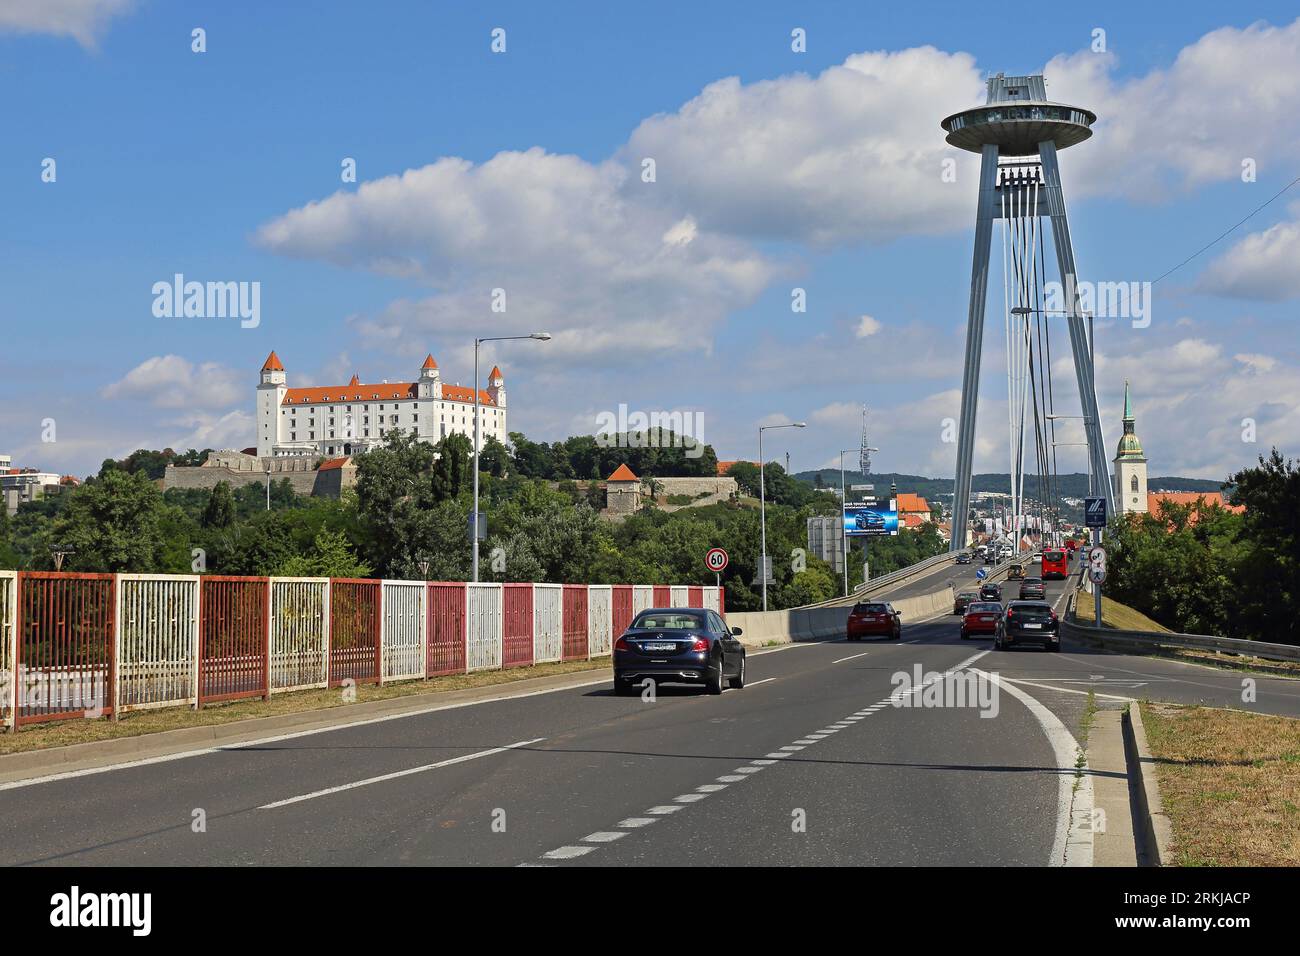 Bratislava, Slovakia - July 10, 2015: Famous SNP Bridge With UFO Restaurant on Top of Pylon in Capital City Summer Day. Stock Photo